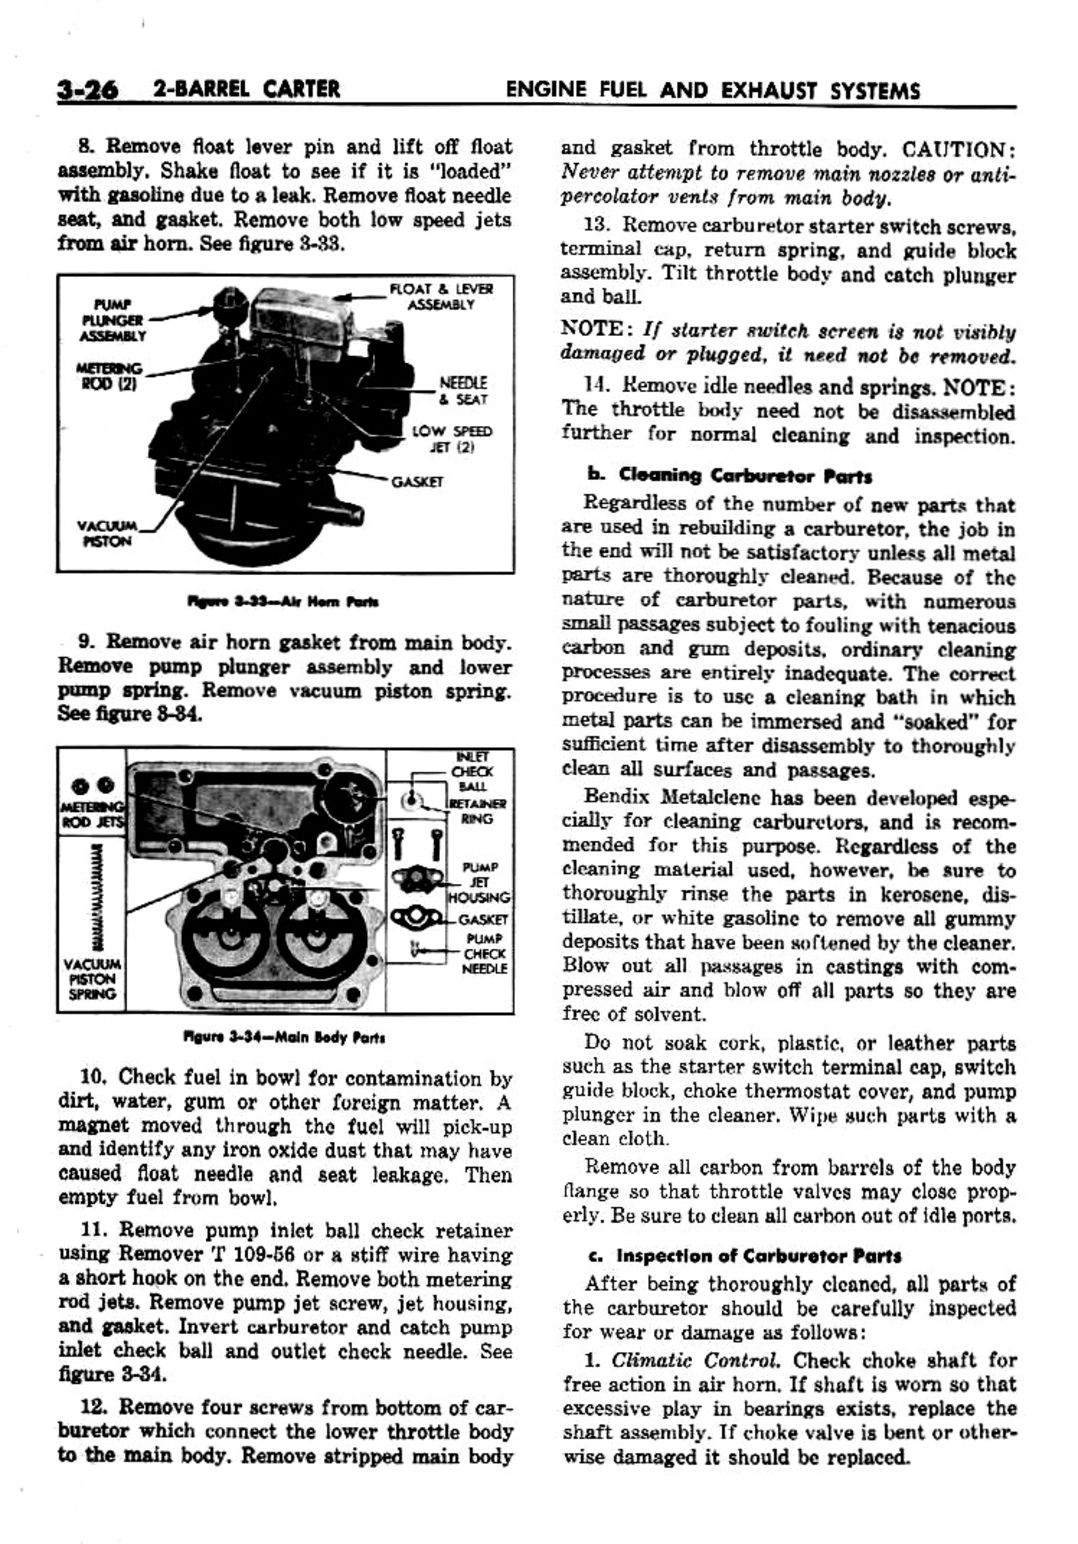 n_04 1959 Buick Shop Manual - Engine Fuel & Exhaust-026-026.jpg